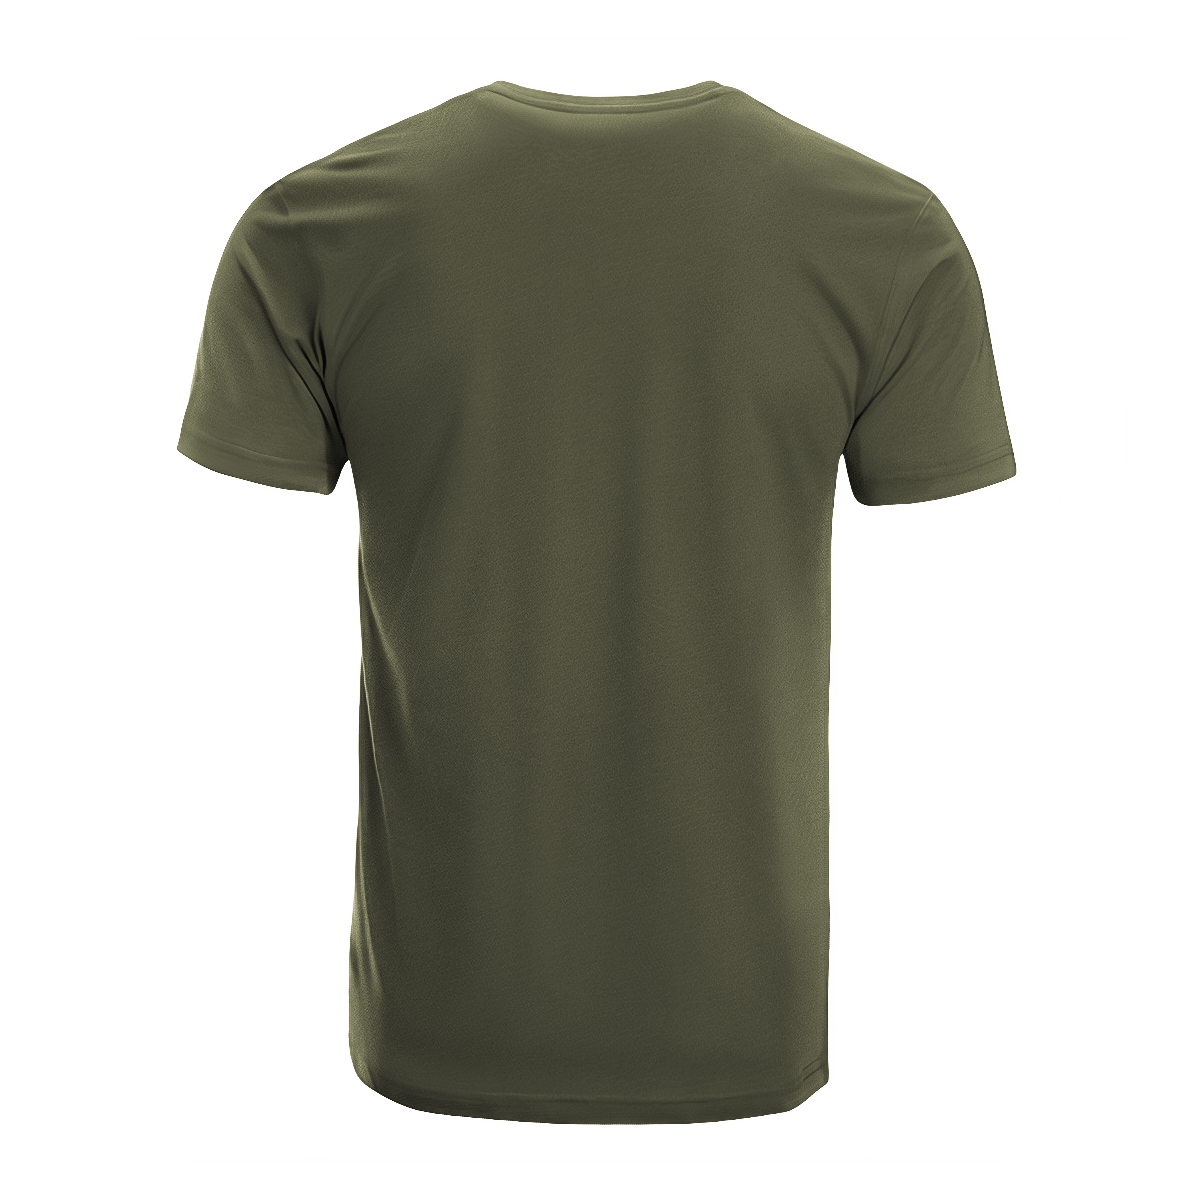 MacKintosh Tartan Crest T-shirt - I'm not yelling style